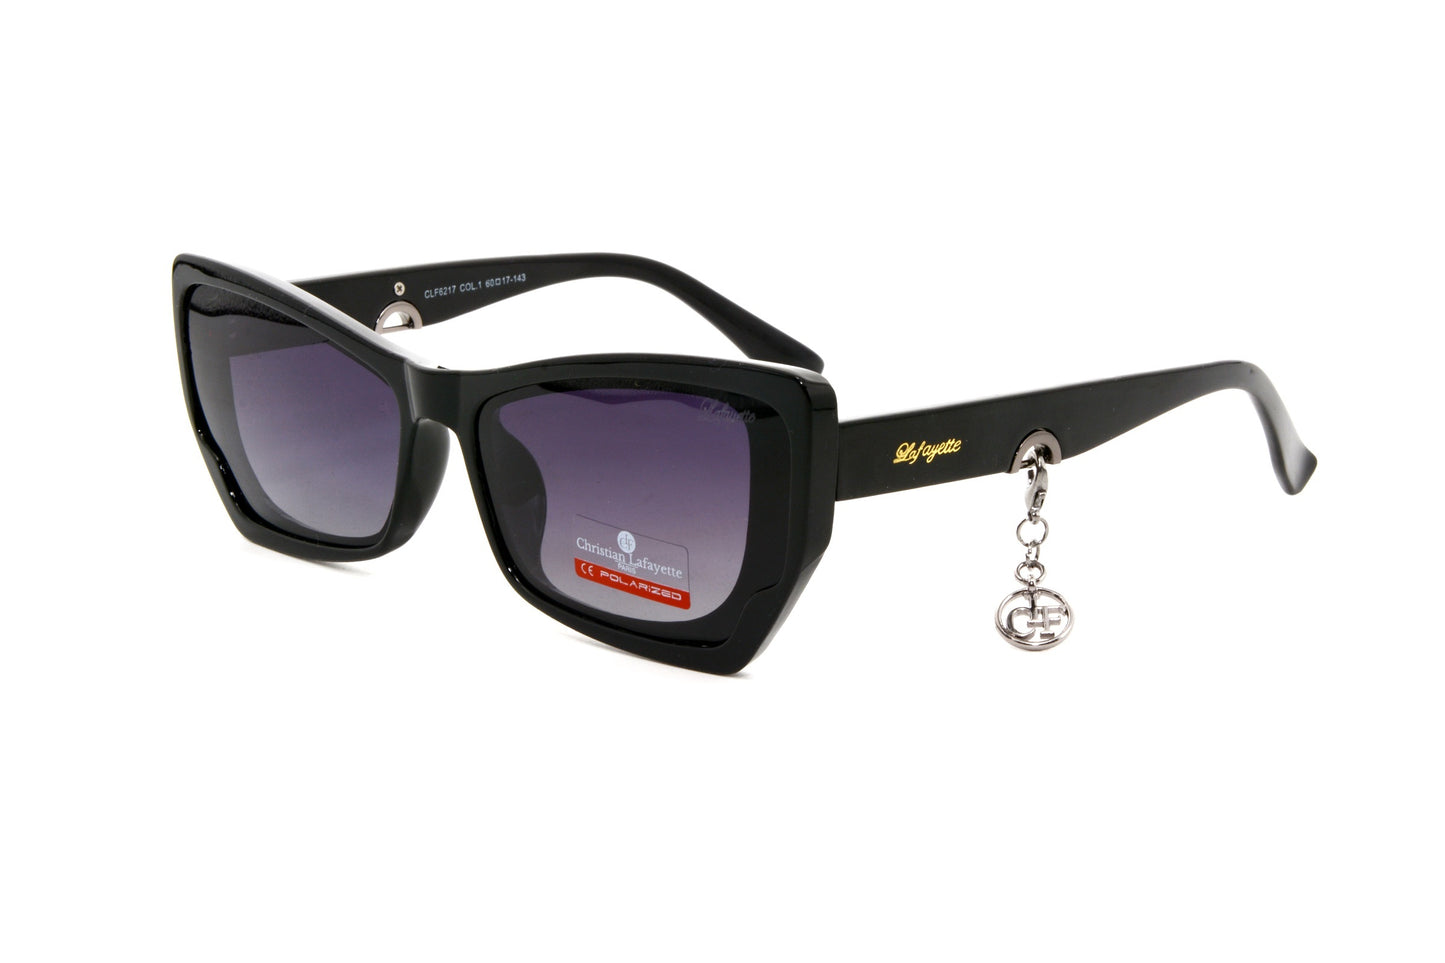 Christian Lafayette sunglasses 6217 C1